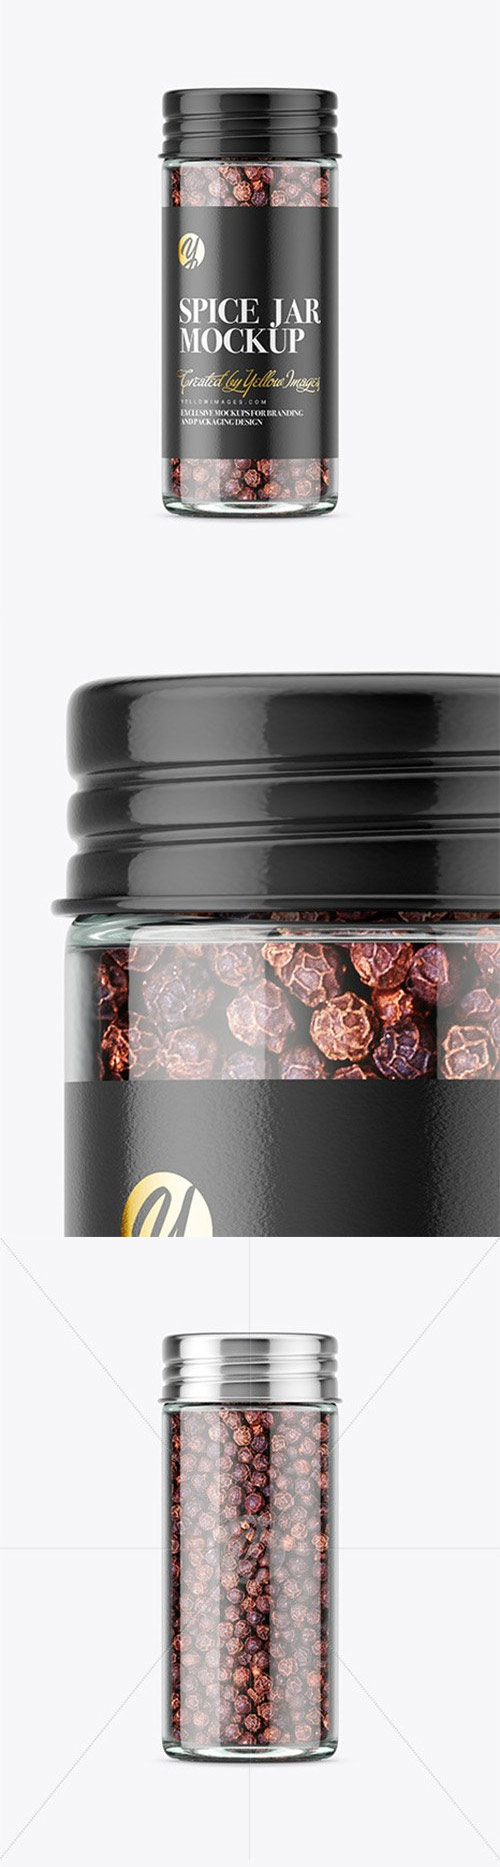 Spice Jar with Black Pepper Mockup 80580